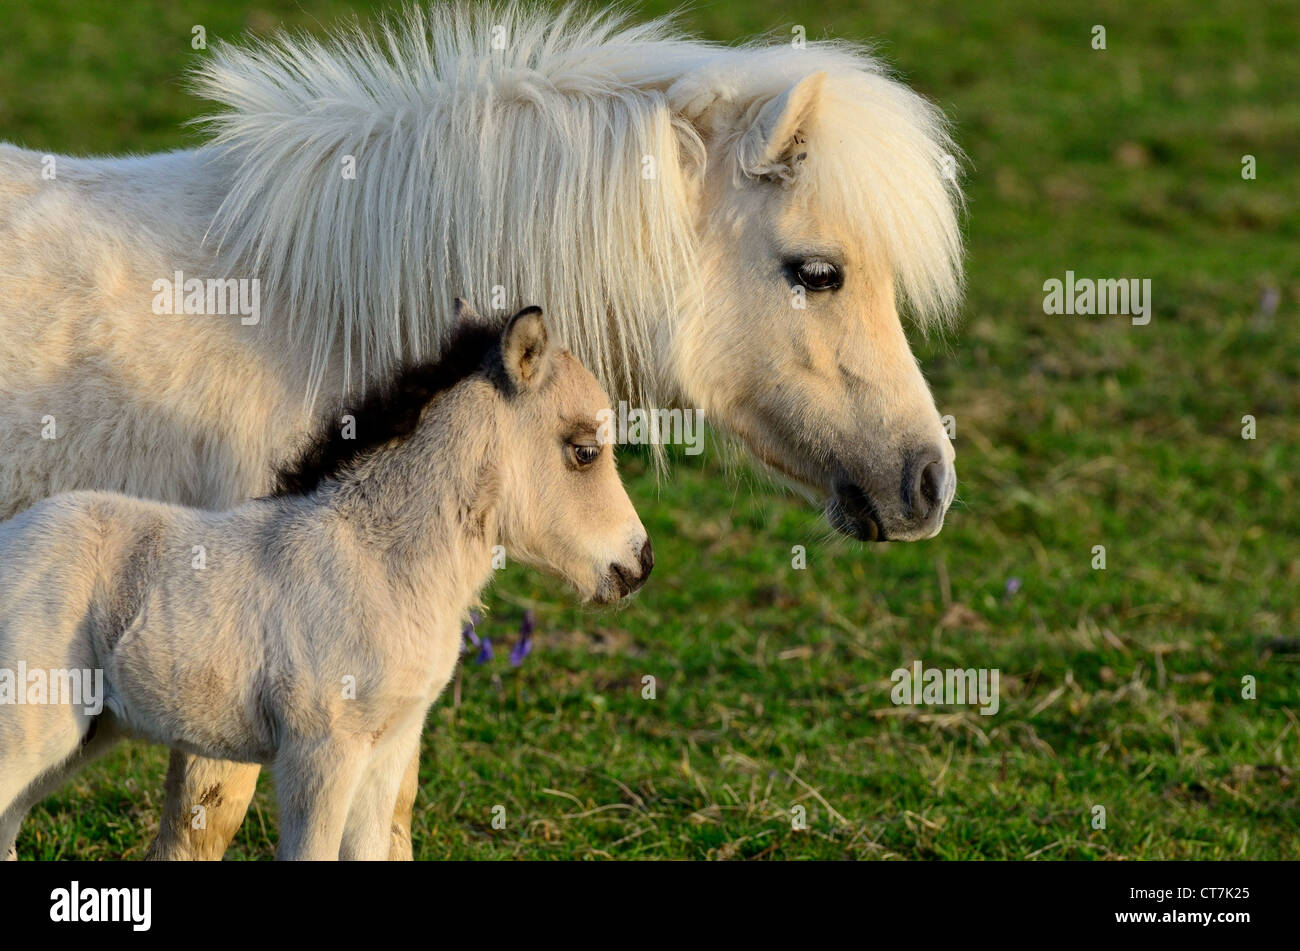 Shetland Pony foal standing beside it's mother Stock Photo